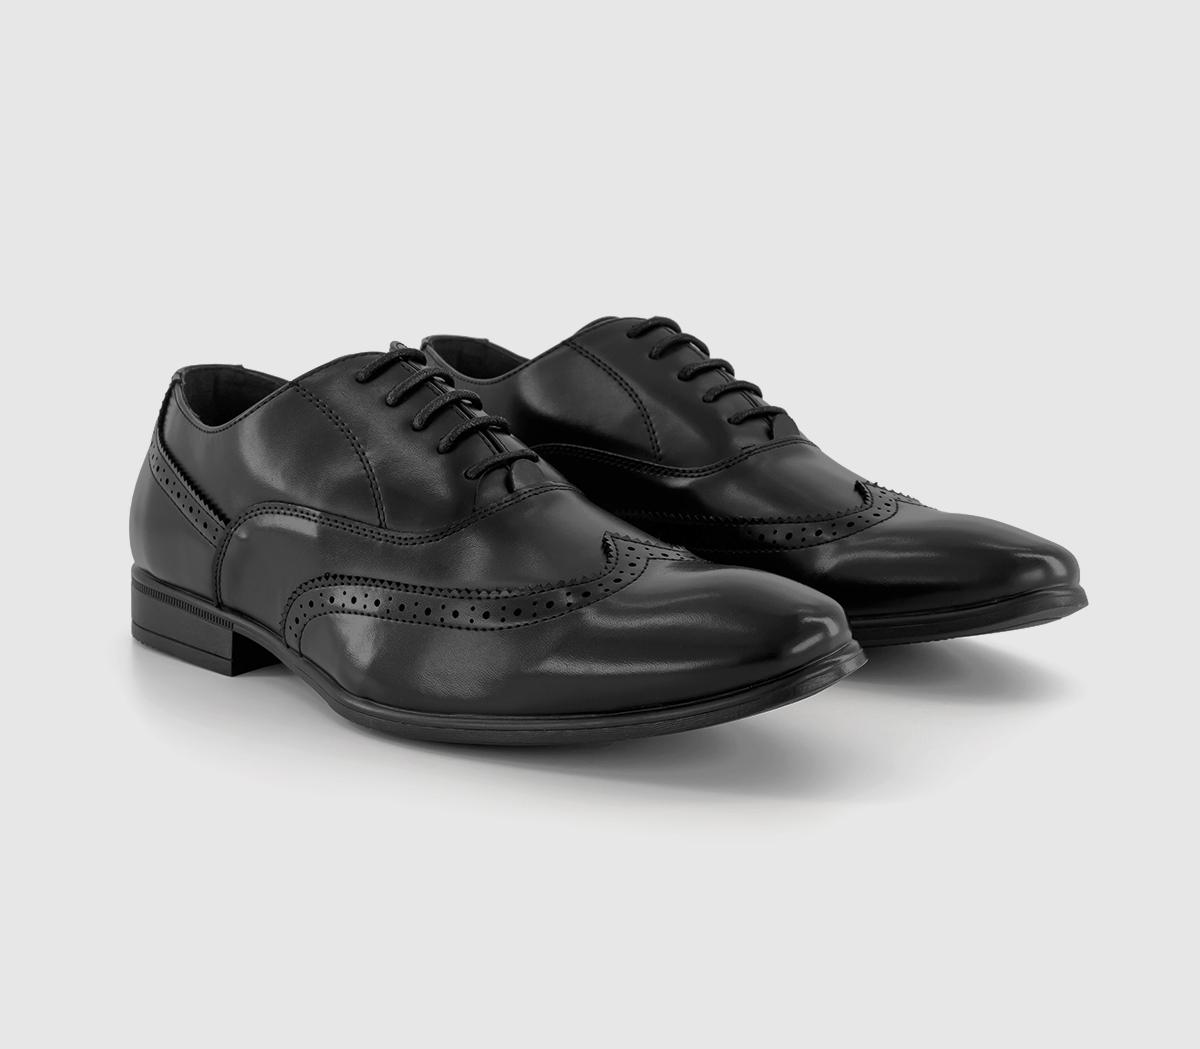 OFFICE Mens Martel Wingtip Oxford Shoes Black, 10